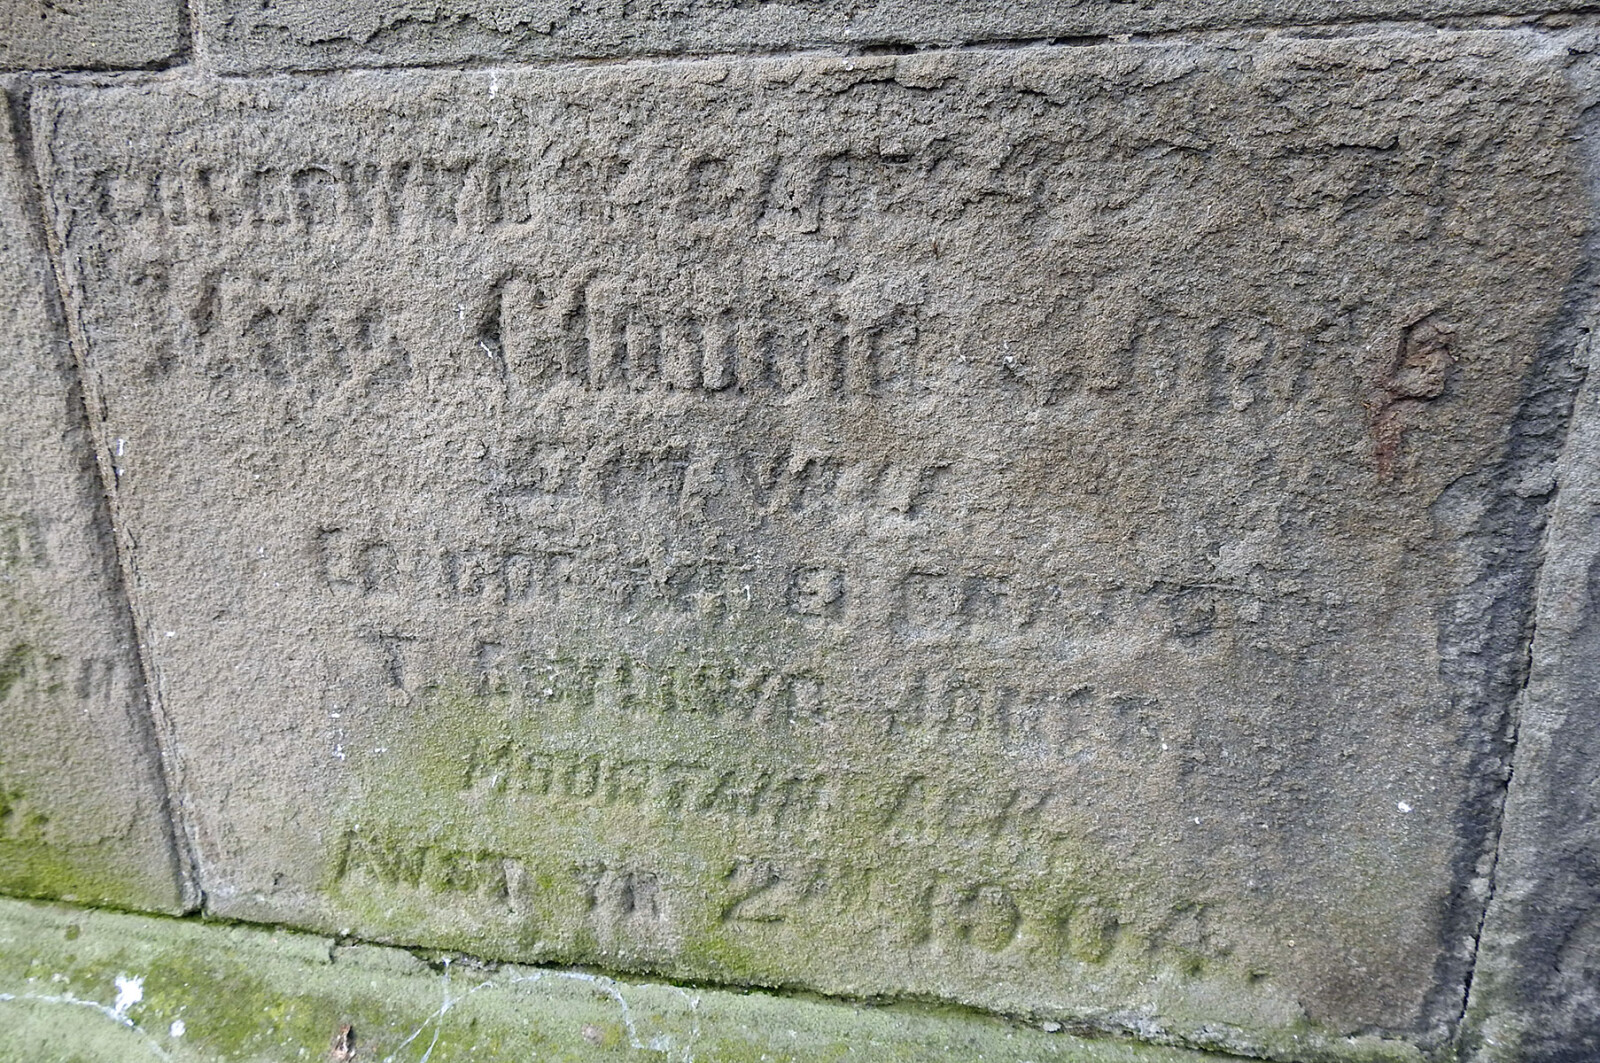 Thomas Jones' memorial stone